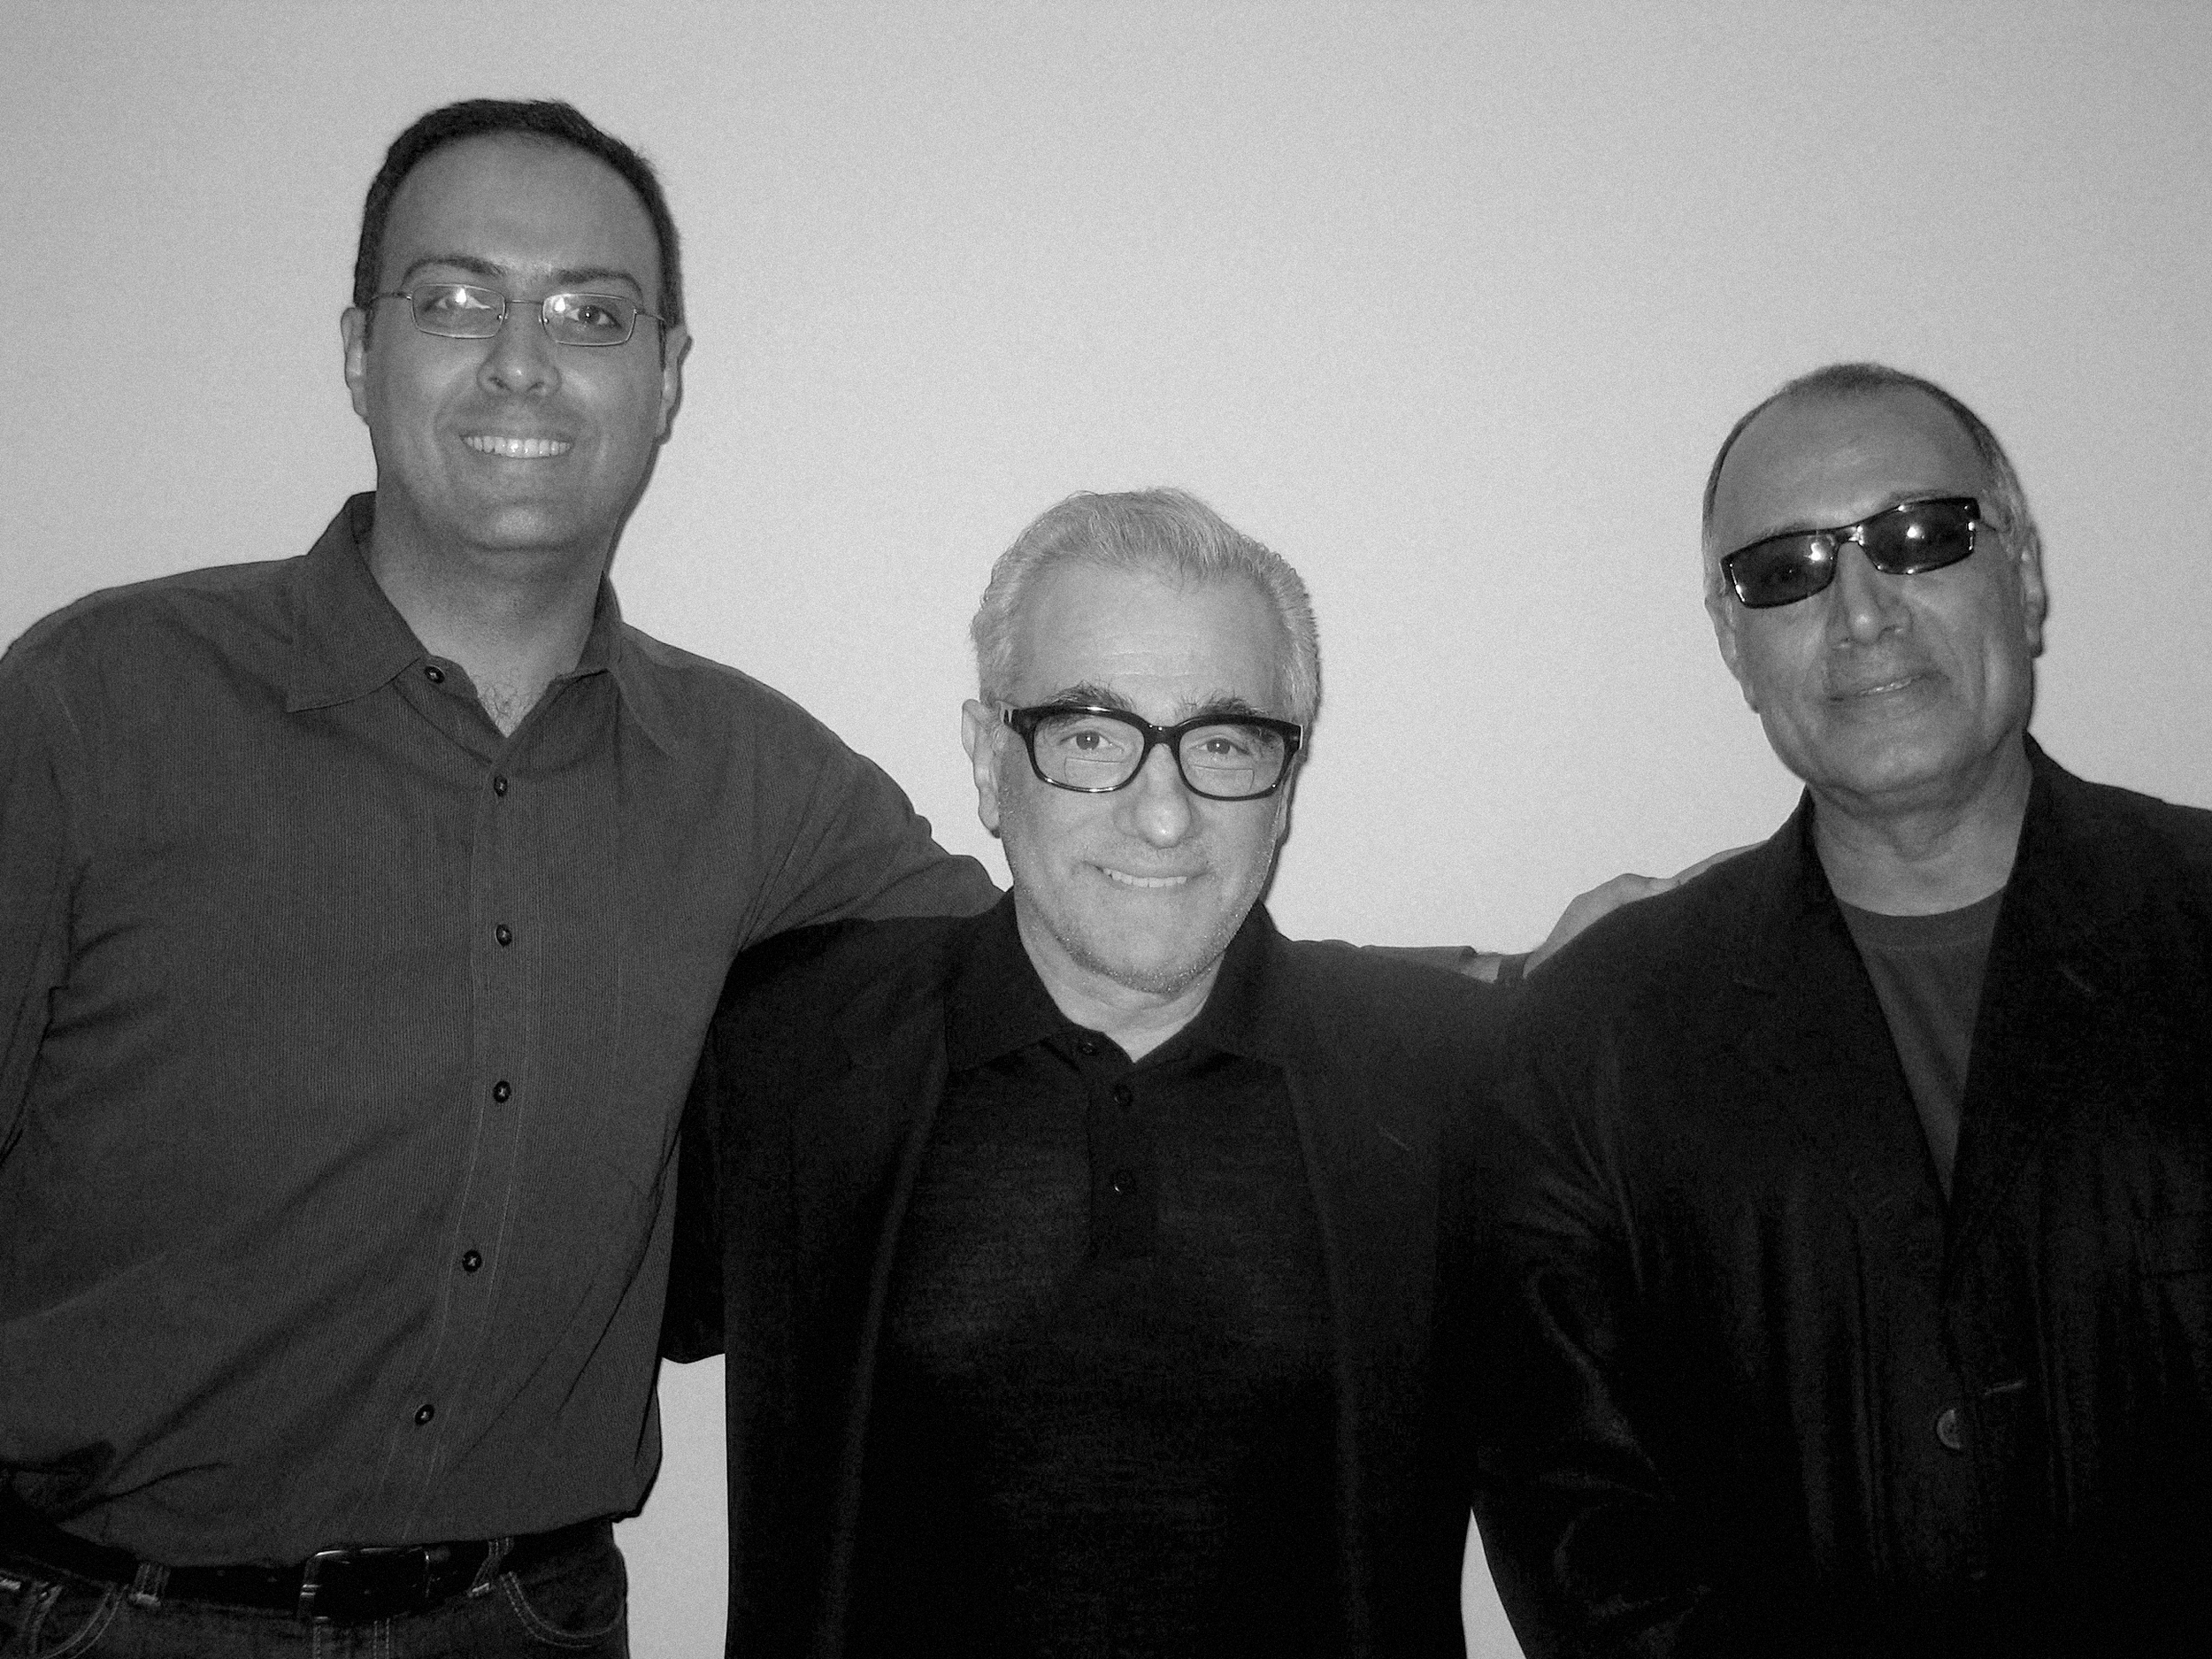 Ahmad Kiarostami, Martin Scorsese and Abbas Kiarostami